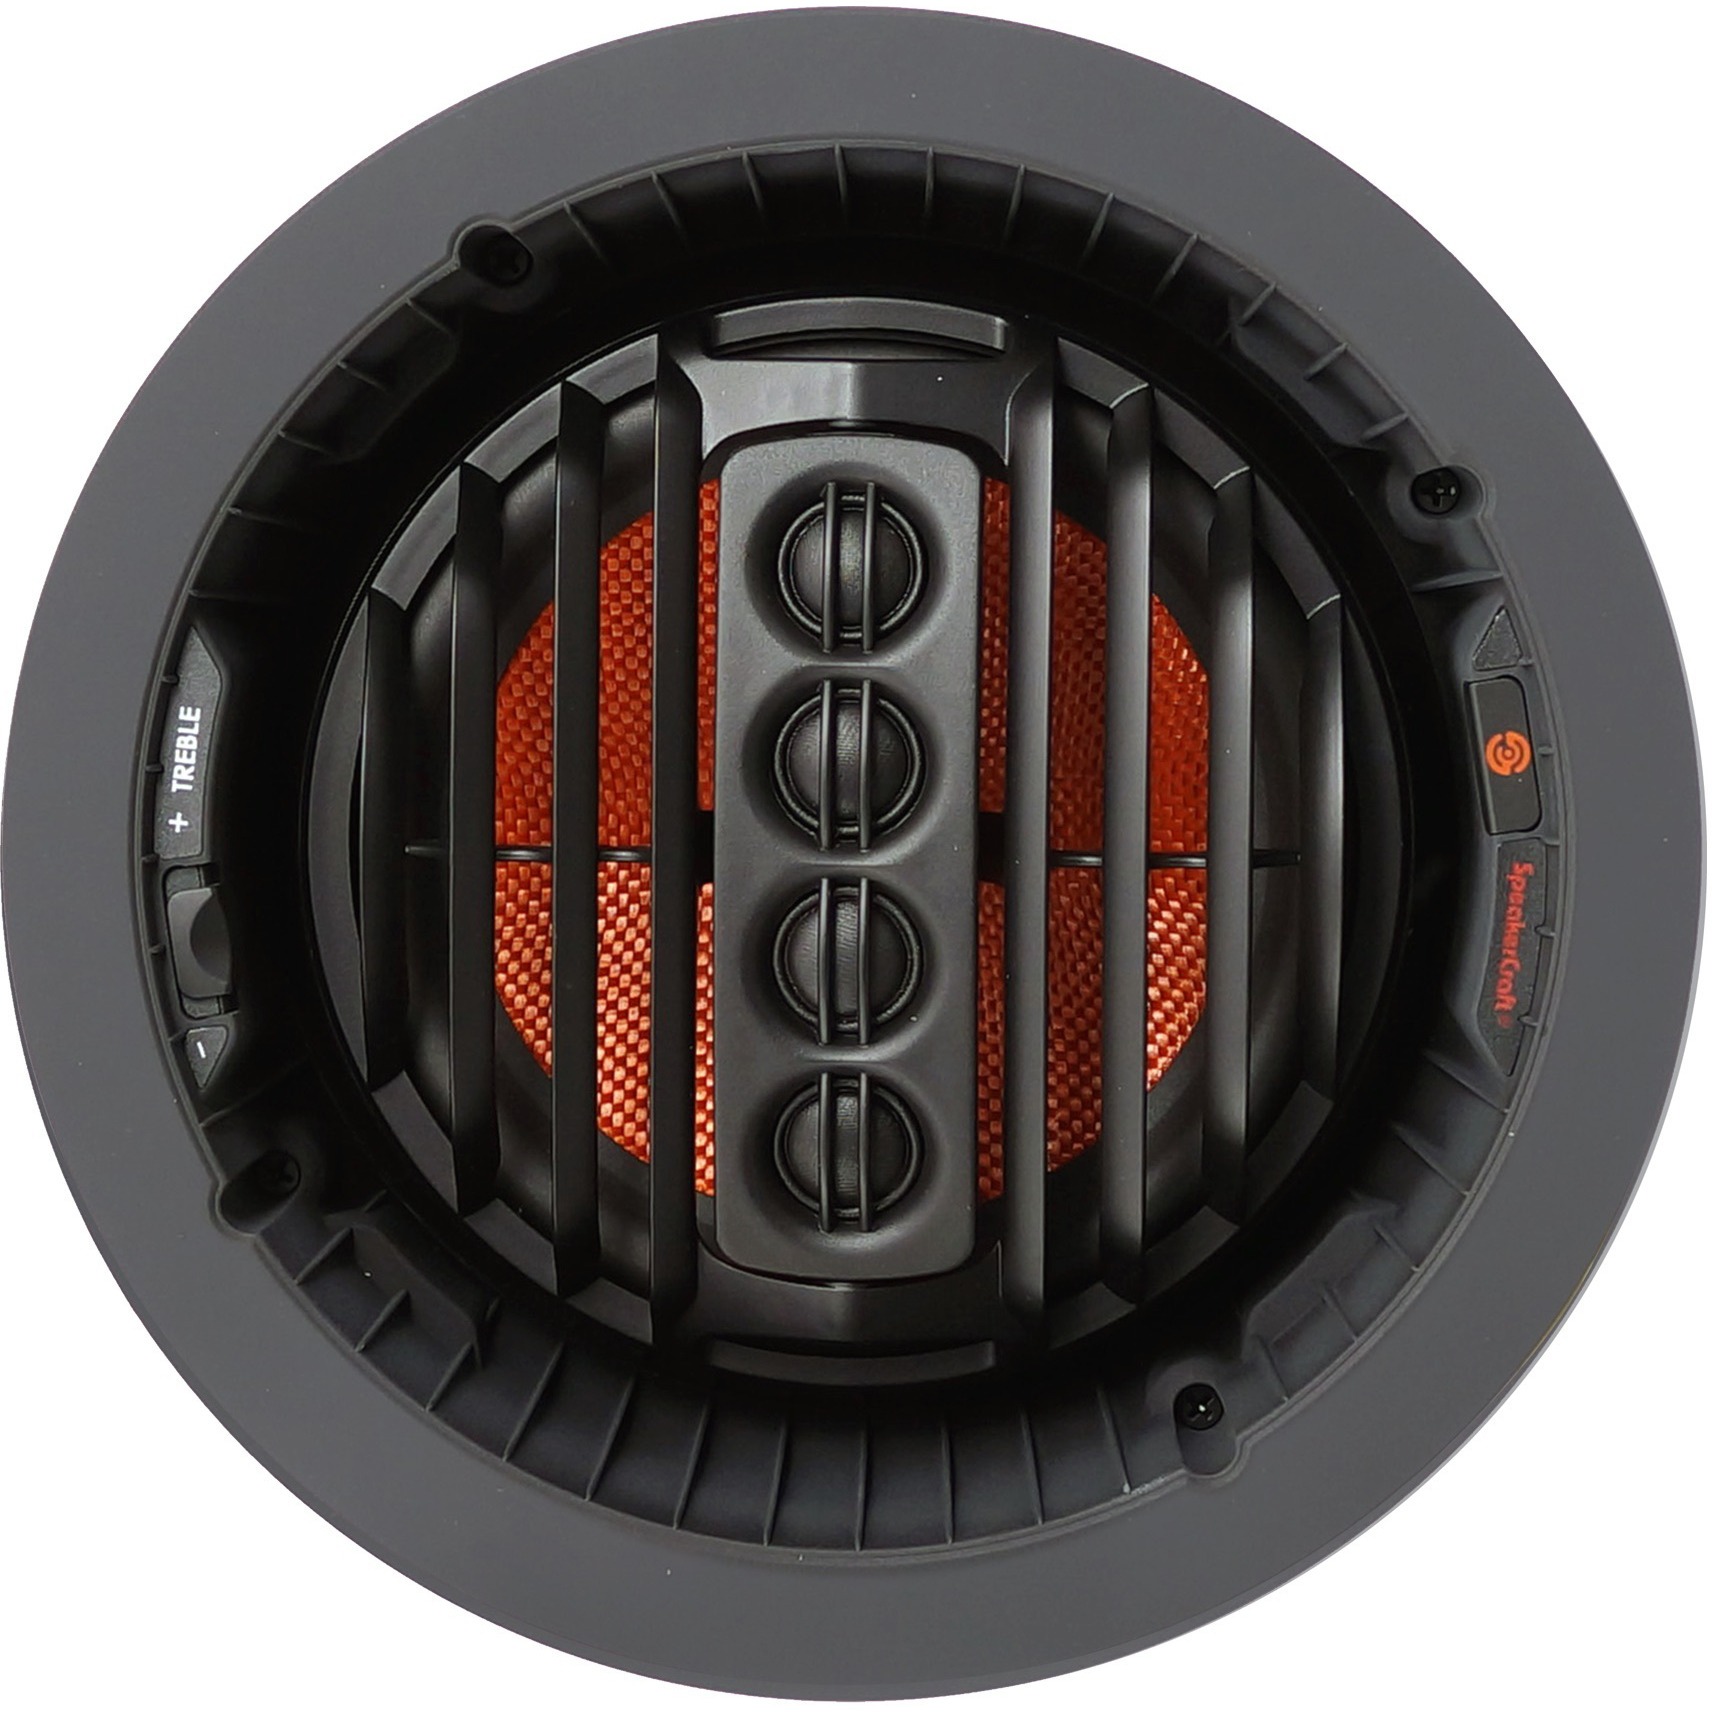 фото Встраиваемая потолочная акустика speakercraft aim7 two series 2